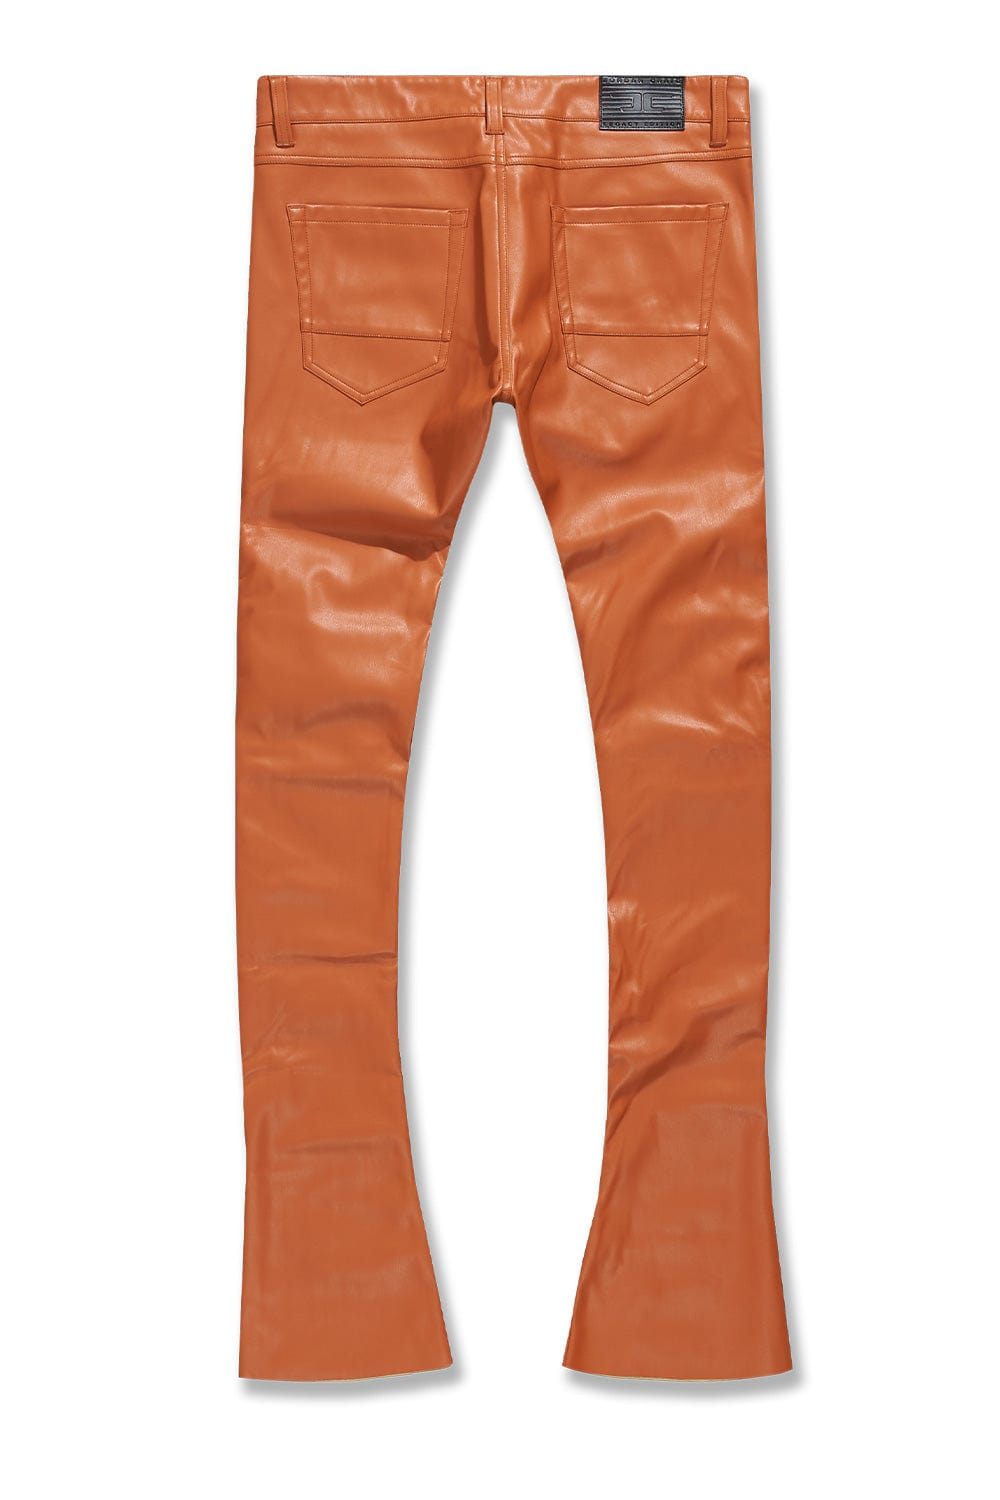 Jordan Craig Ross Stacked - Monte Carlo Pants (Burnt Orange)